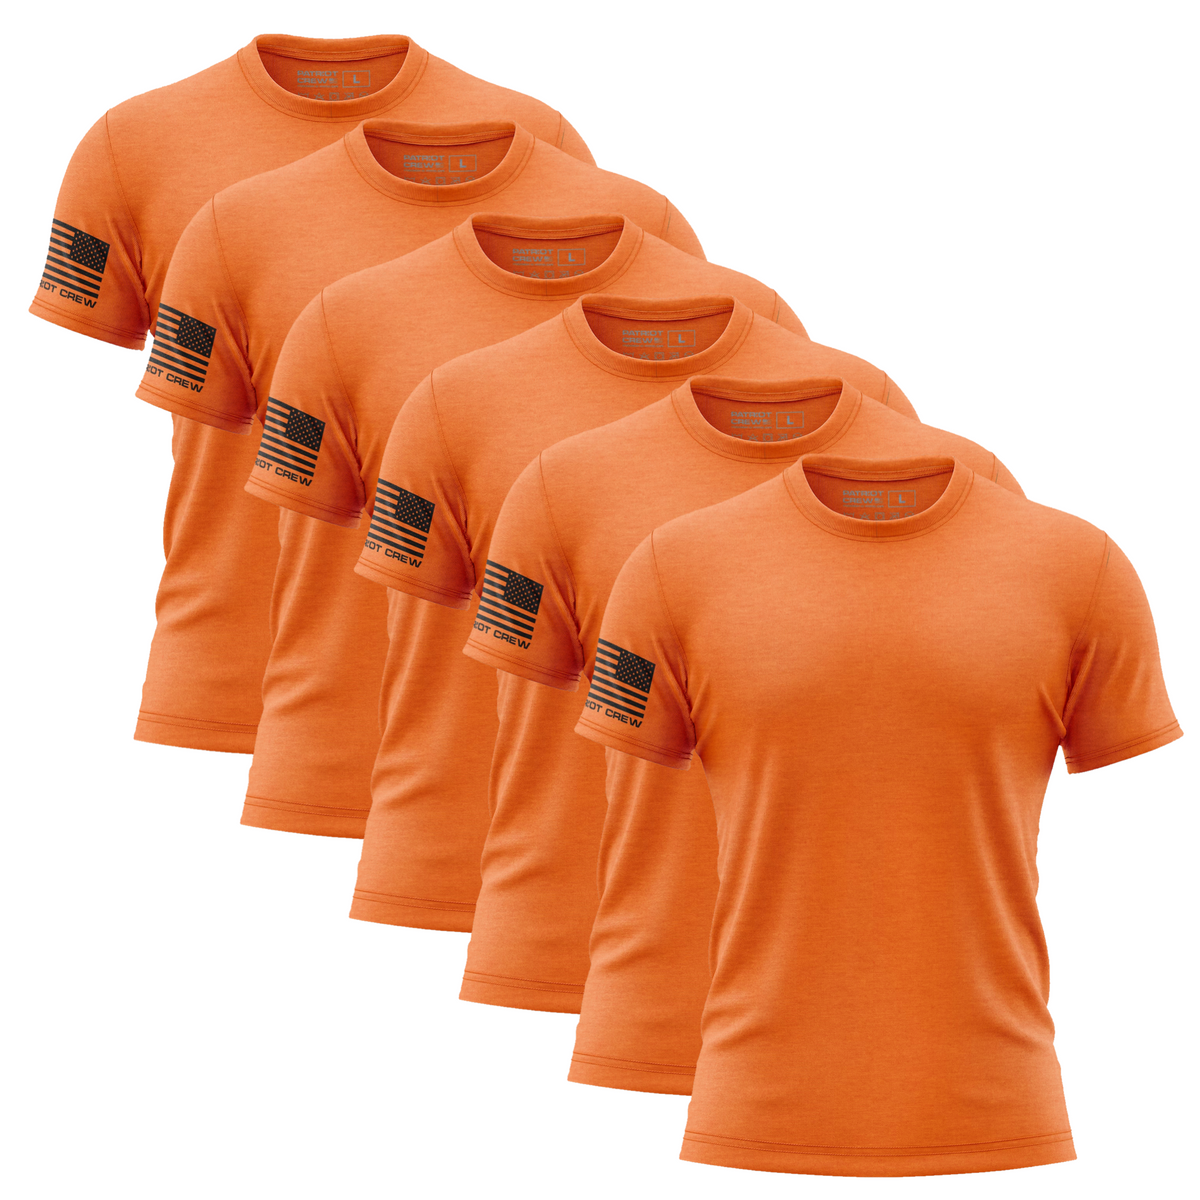 Safety Orange T-Shirt (6 Pack)